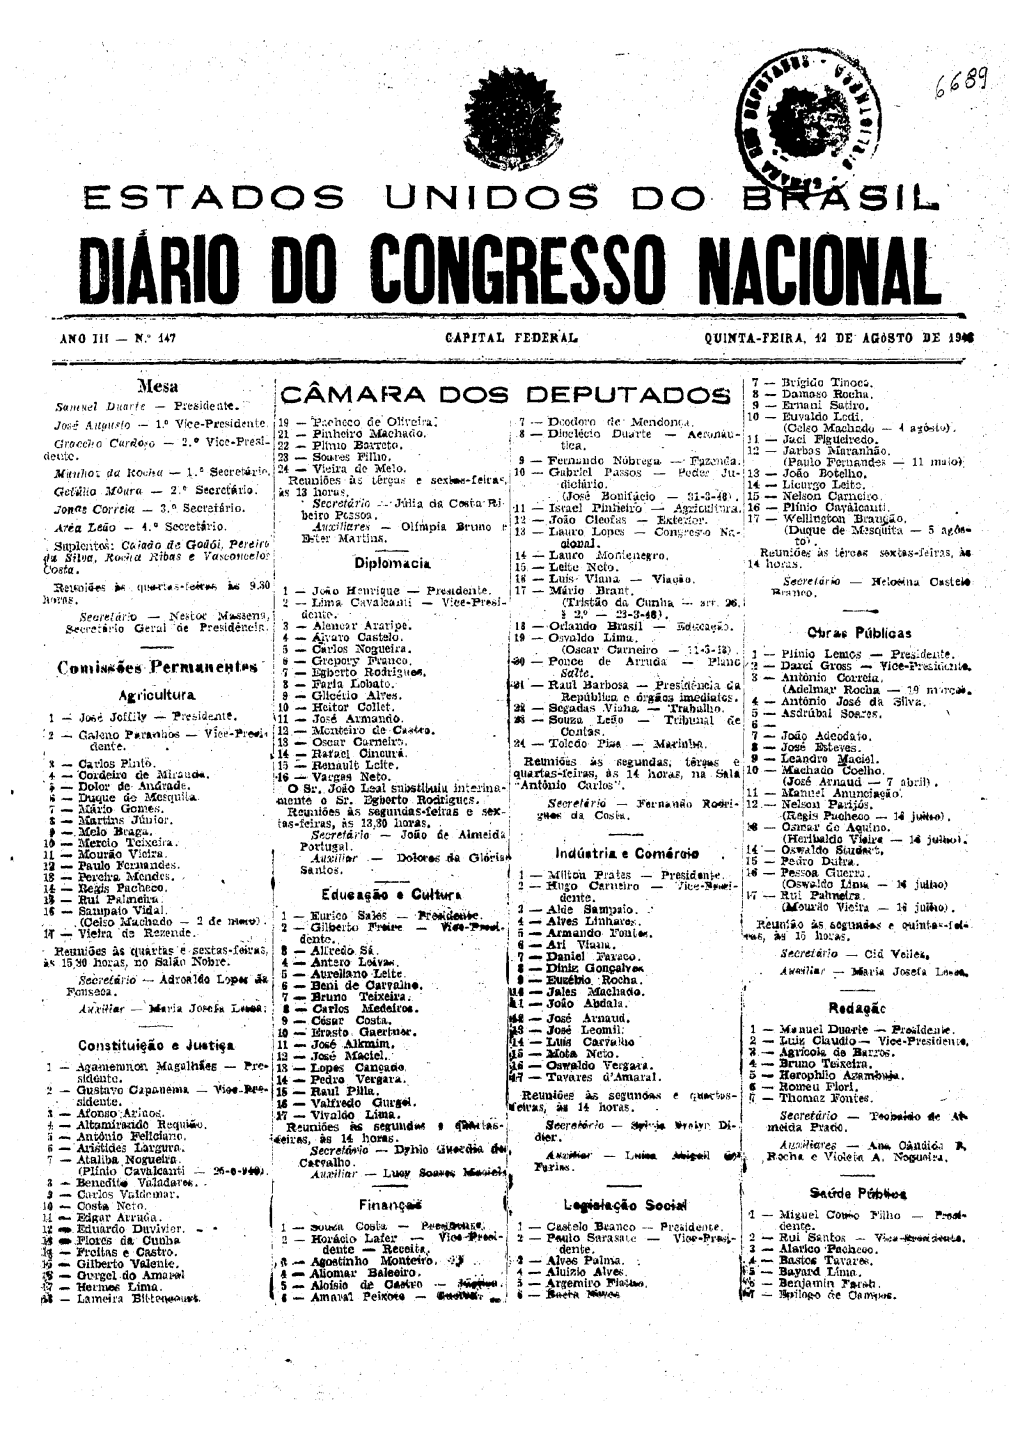 Diari800 Congresso Nacional